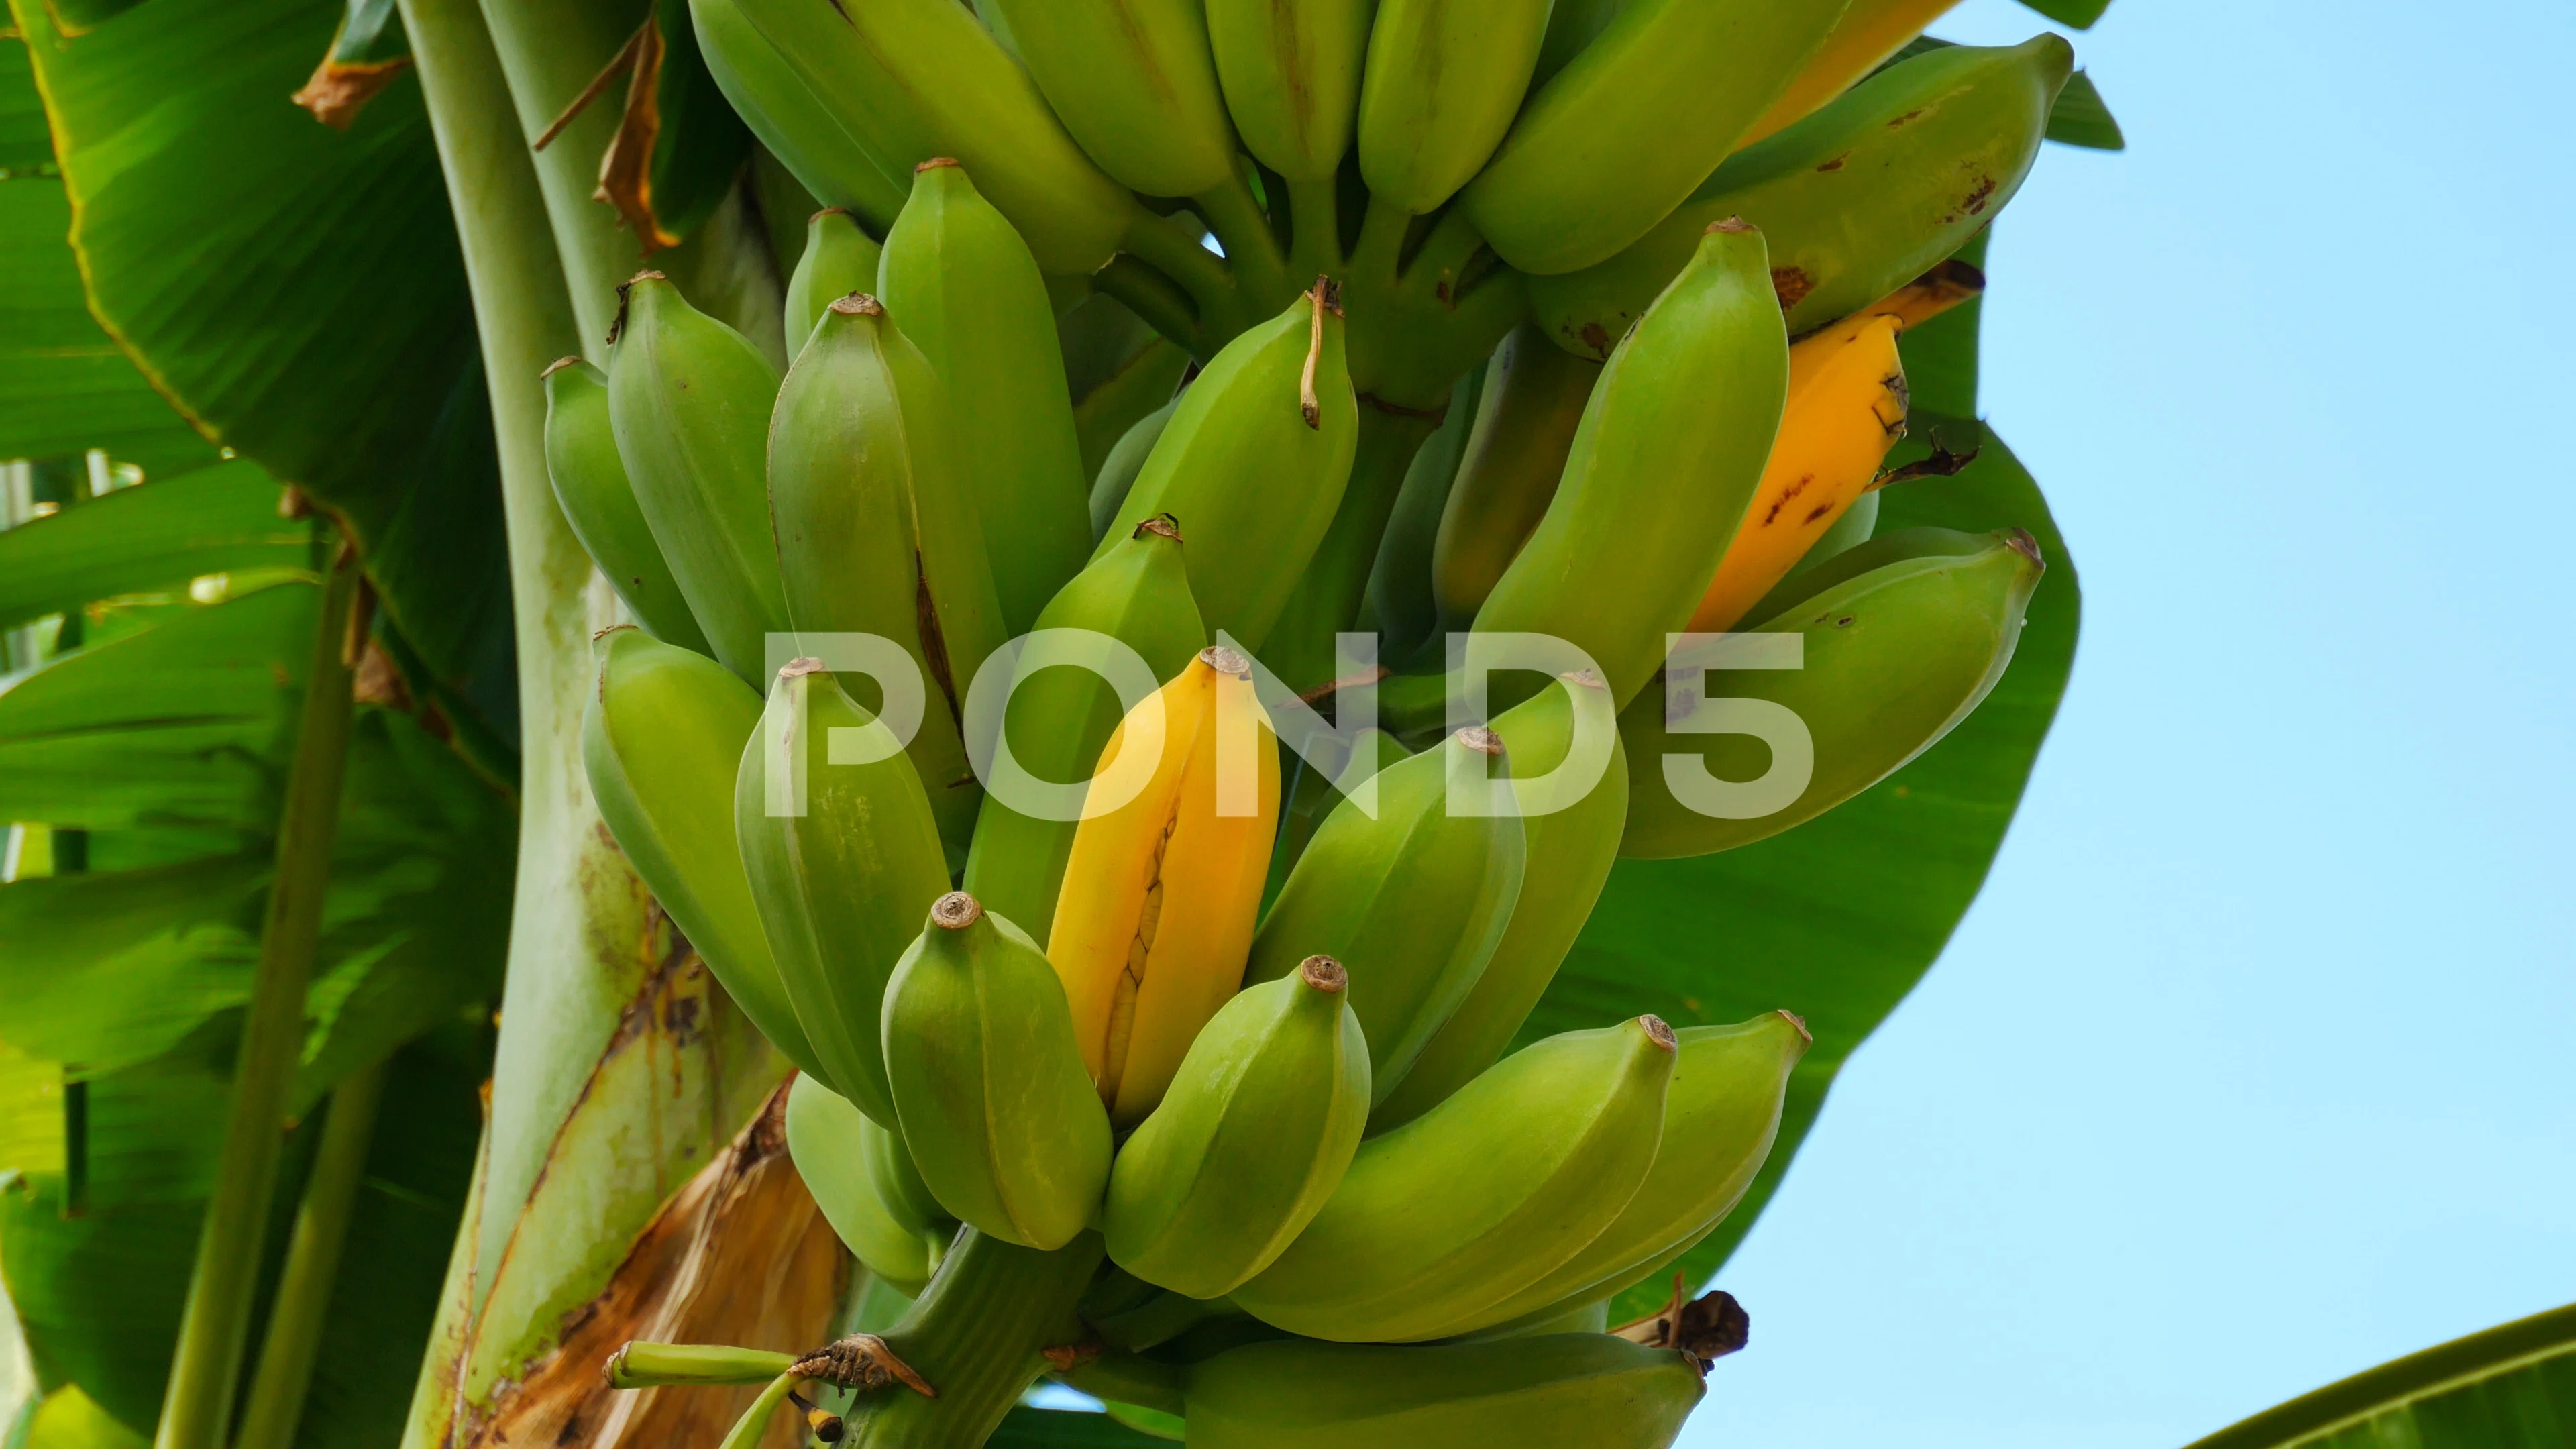 https://images.pond5.com/large-bunch-organic-bananas-banana-076976678_prevstill.jpeg